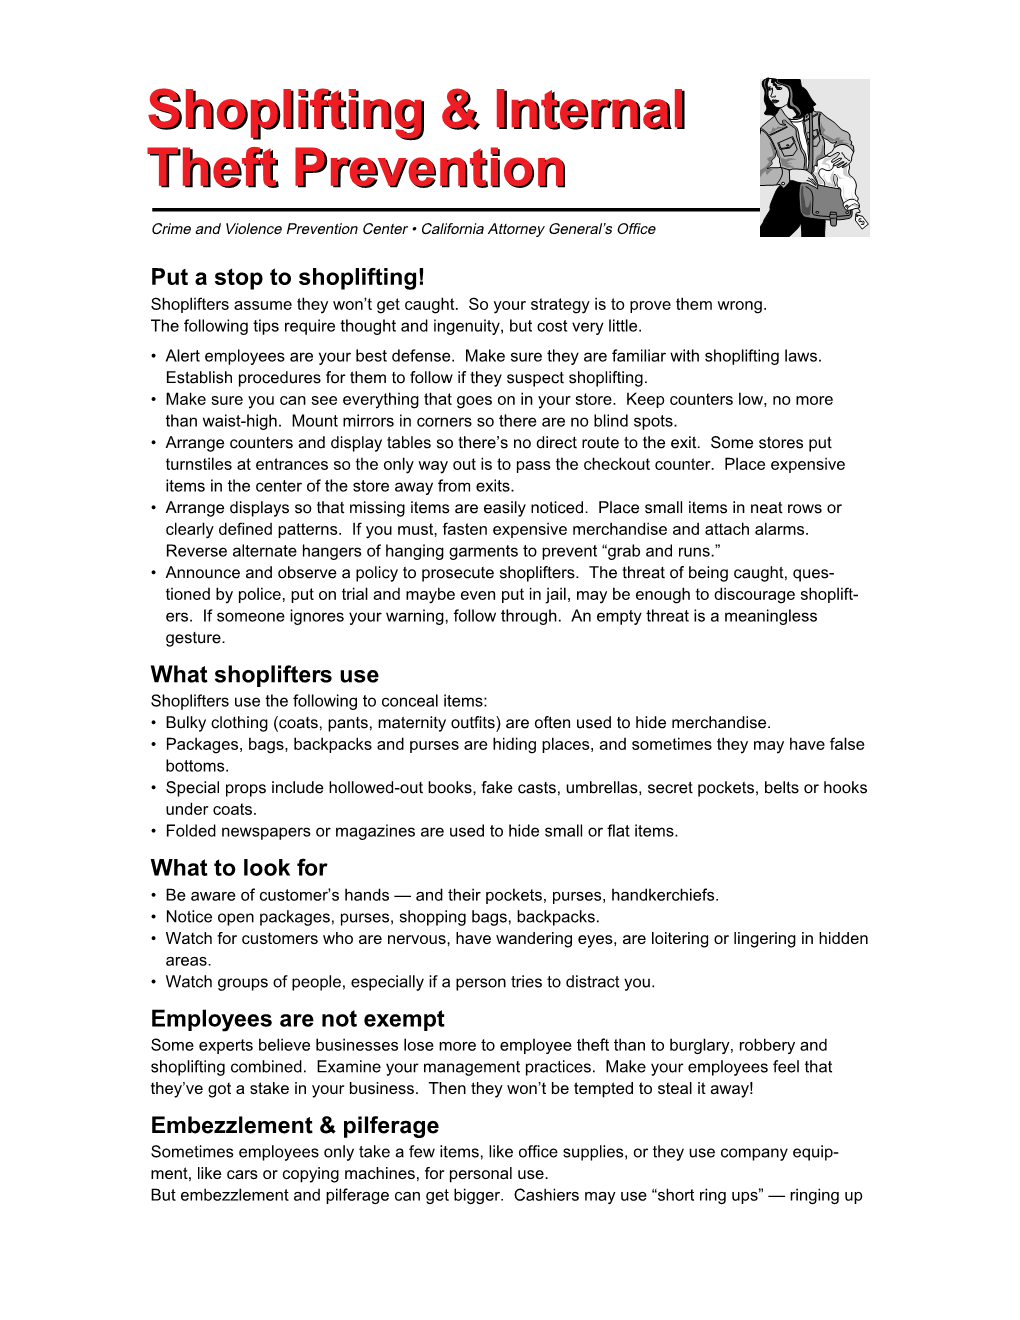 Shoplifting & Internal Theft Prevention Shoplifting & Internal Theft Prevention